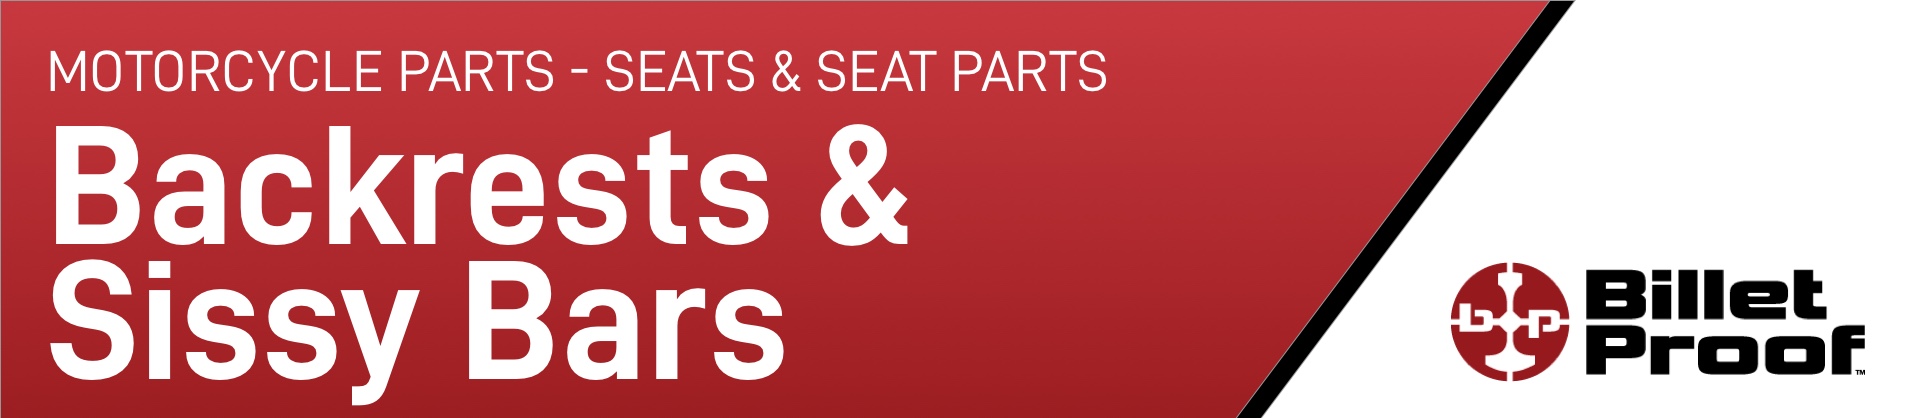 motorcycle-parts-seats-seat-parts-backrests-sissy-bars.jpg